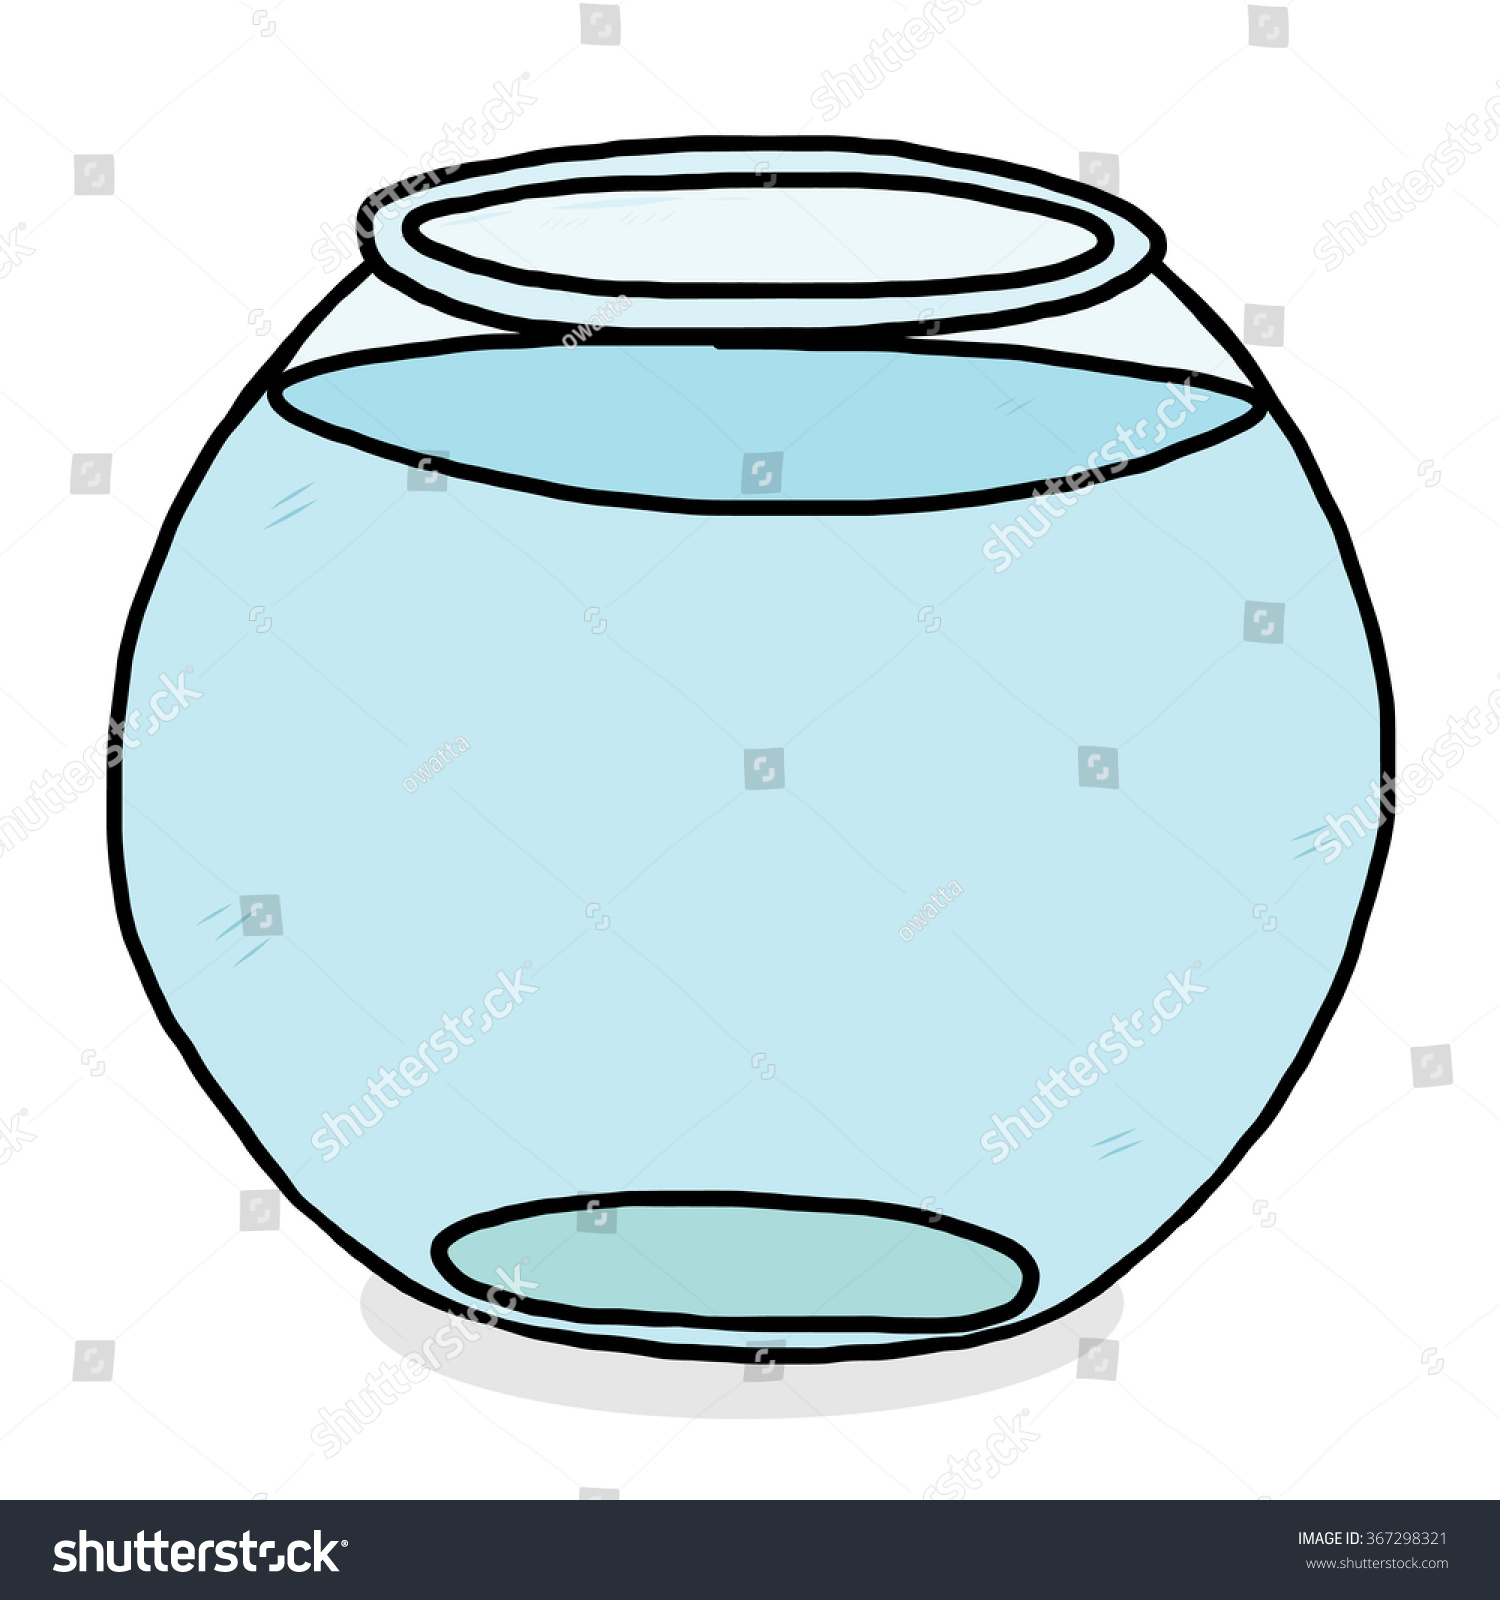 Water Glass Bowl Cartoon Vector Illustration Stock Vector 367298321 ...